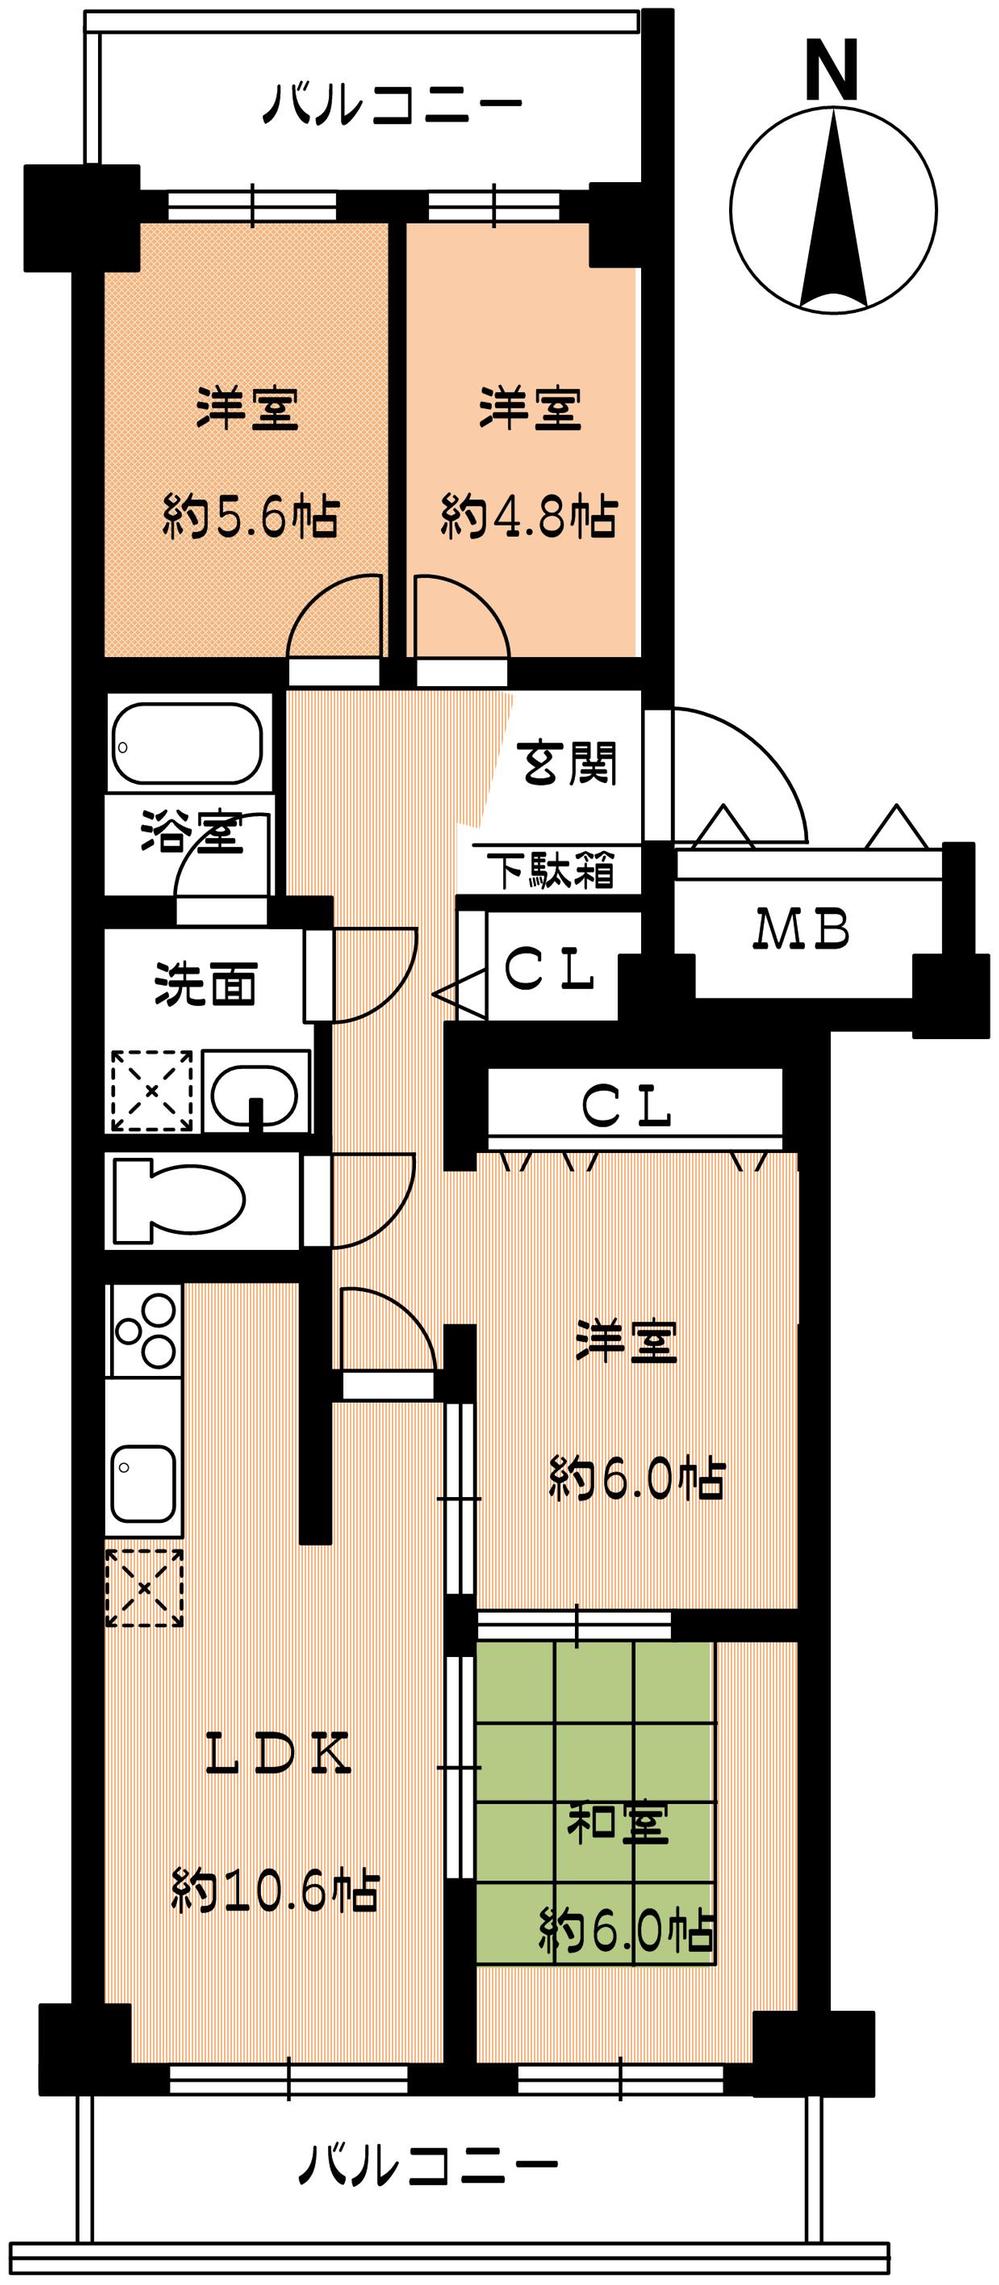 Floor plan. 4LDK, Price 16.8 million yen, Occupied area 75.17 sq m , Fully renovated property of balcony area 15.07 sq m 4LDK